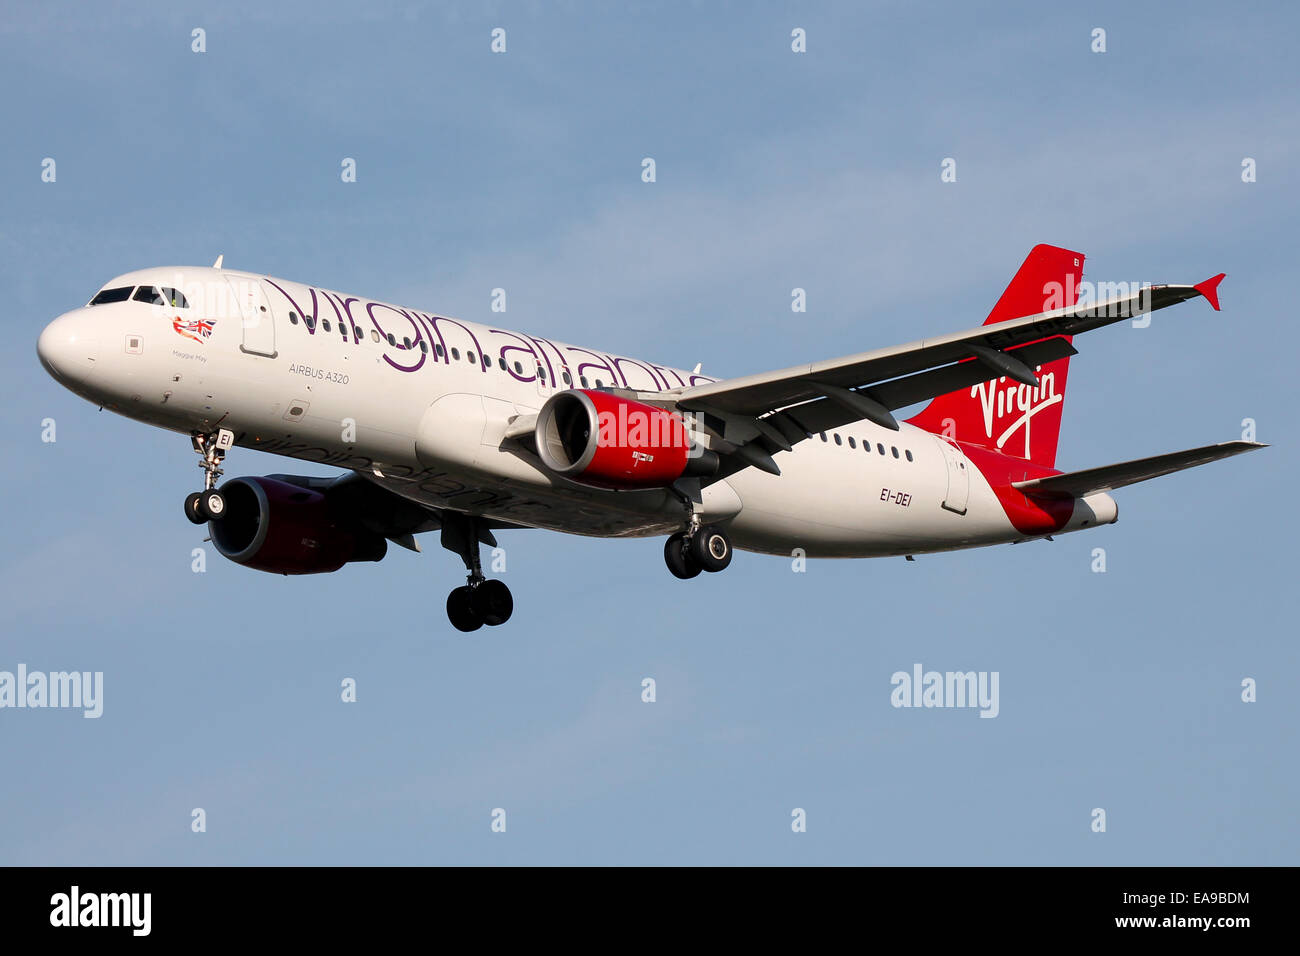 Virgin Atlantic Airbus A320 approaches runway 27L at London Heathrow Airport. Stock Photo